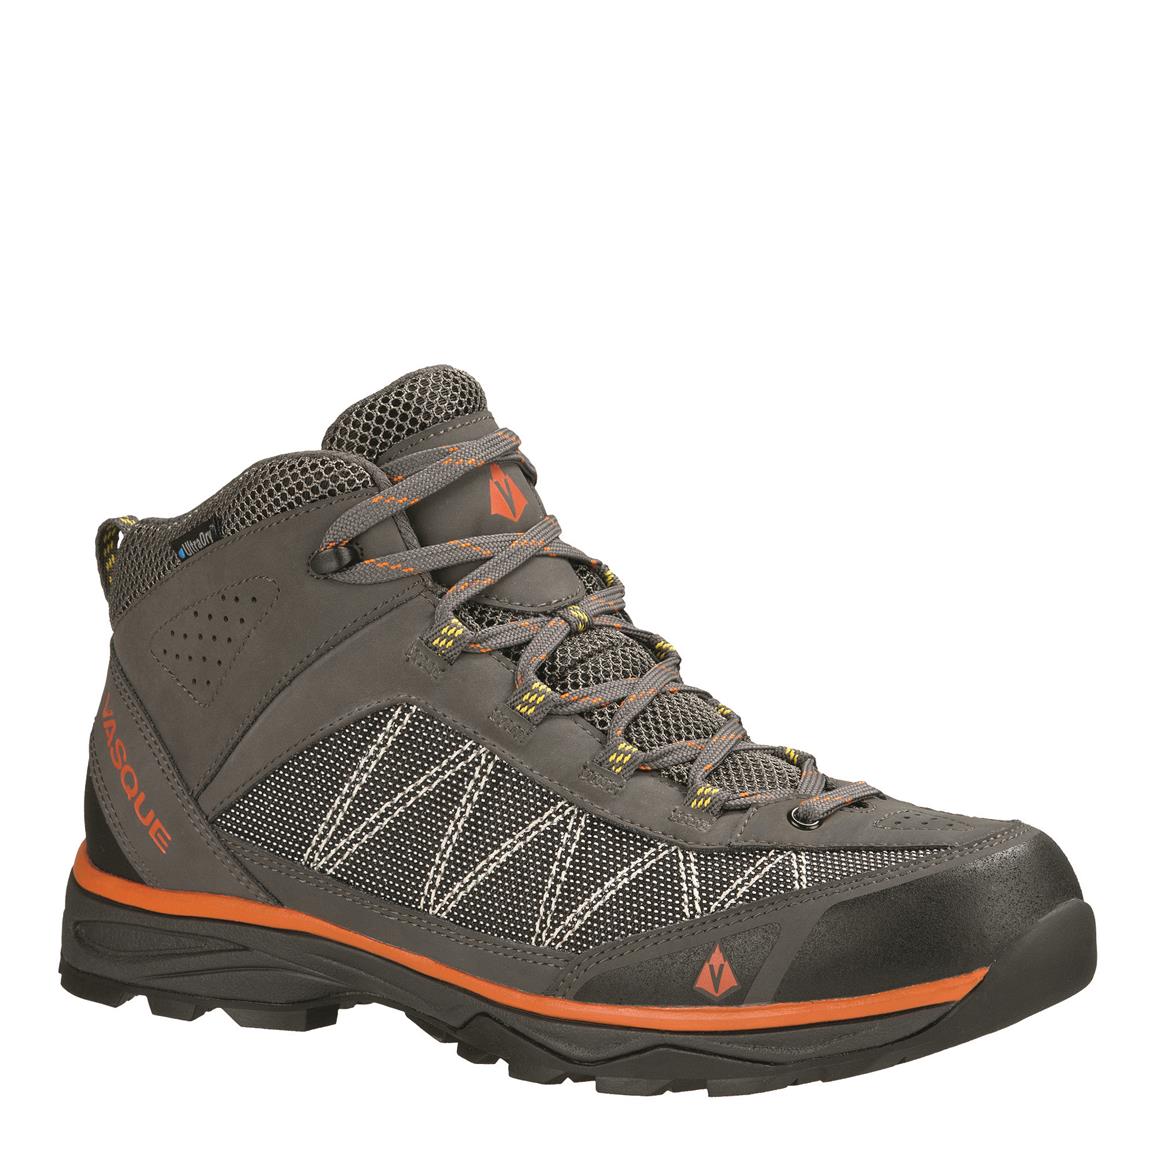 Vasque Men's Monolith UltraDry Waterproof Hiking Boots - 677882, Hiking ...